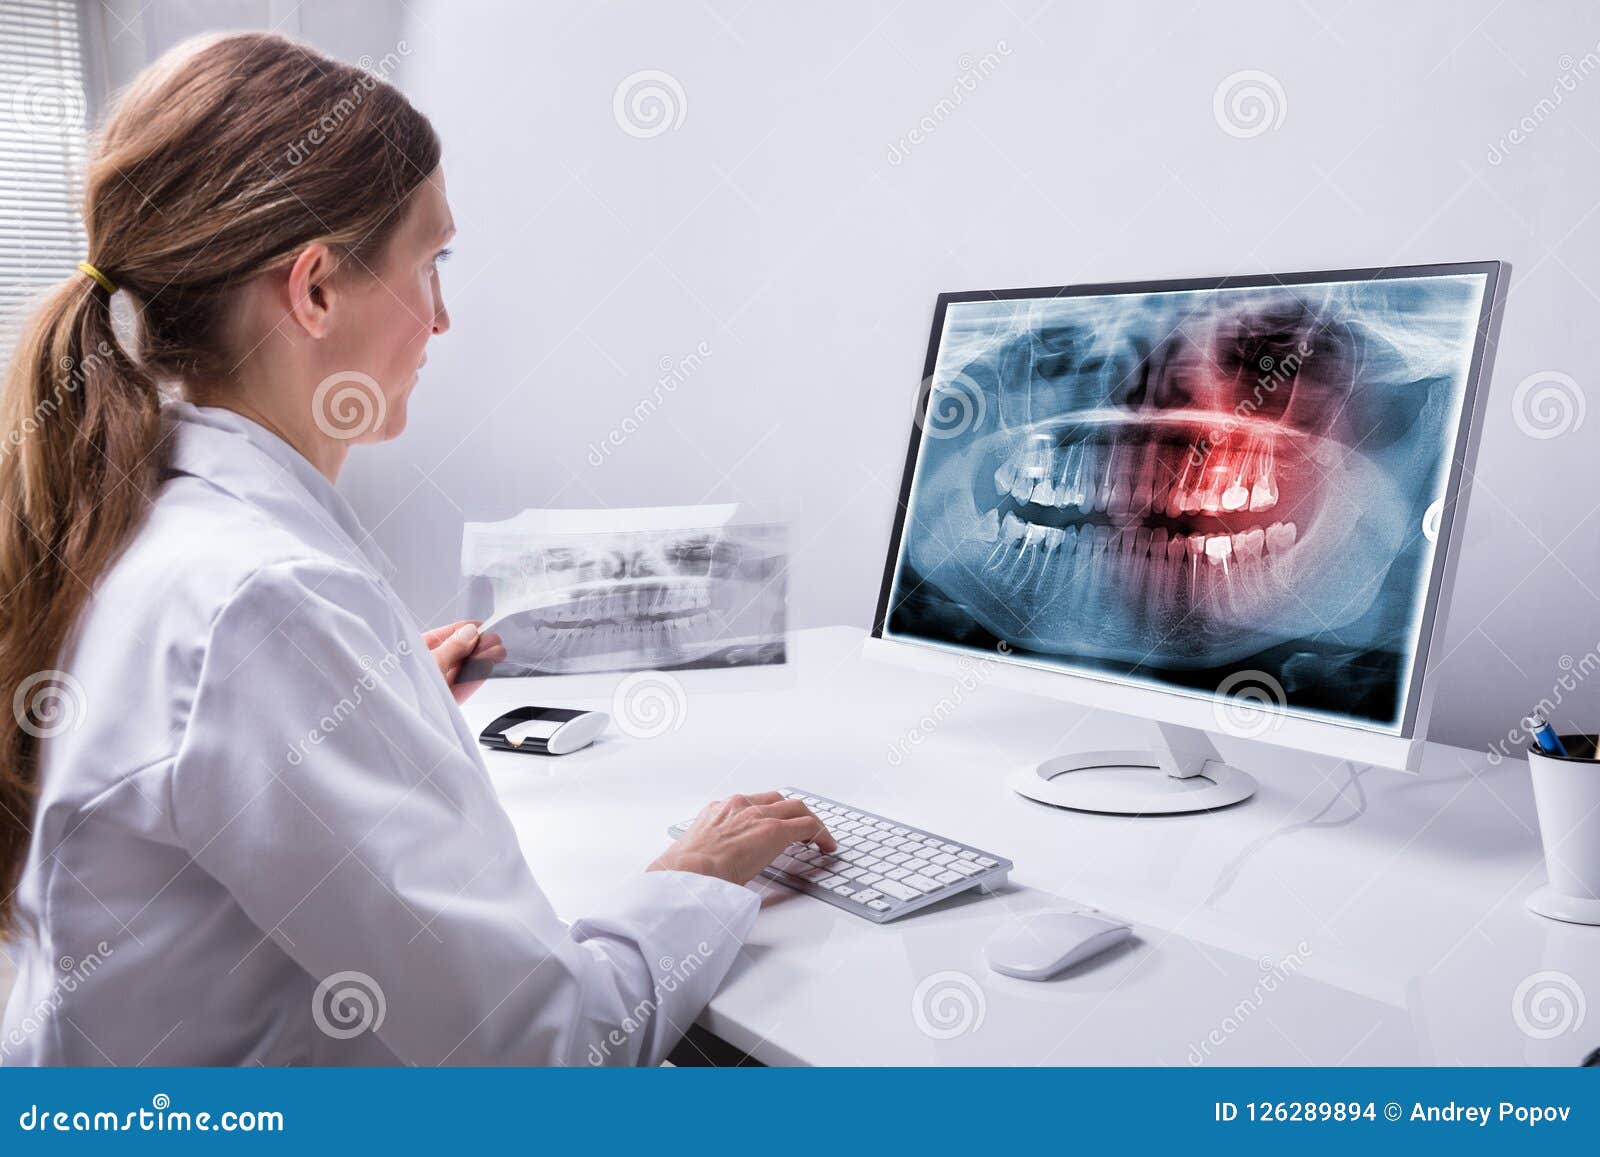 dentist looking at teeth x-ray on computer